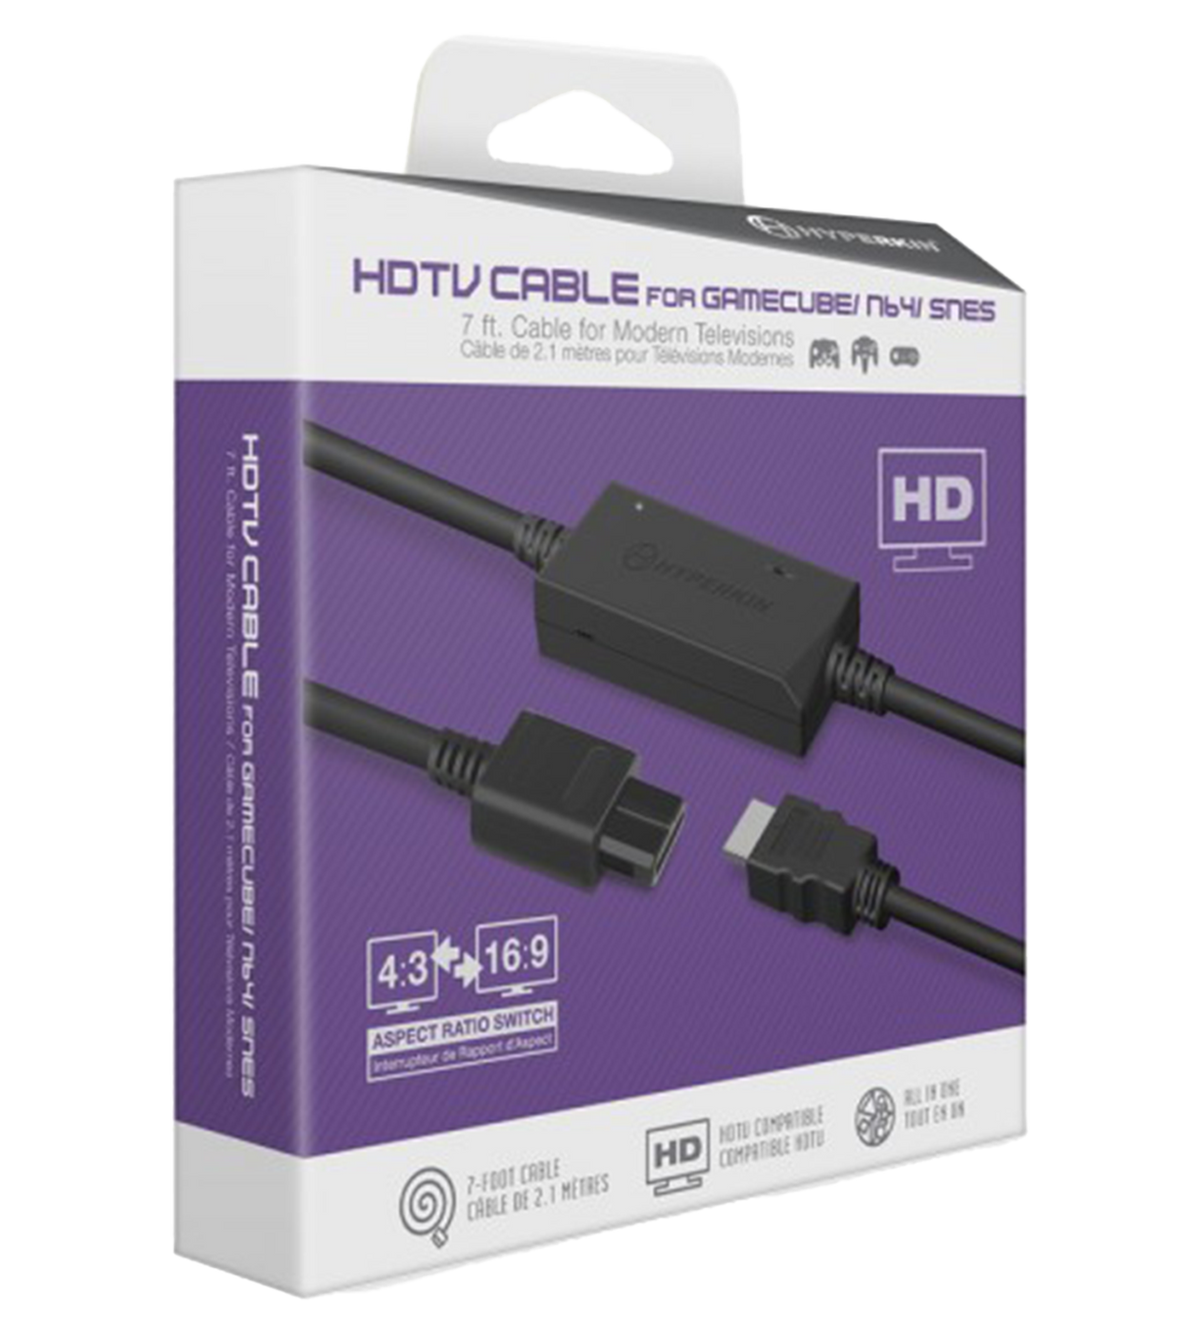 Hyperkin Nintendo 64/SNES/GameCube HDMI Link – Limited Run Games